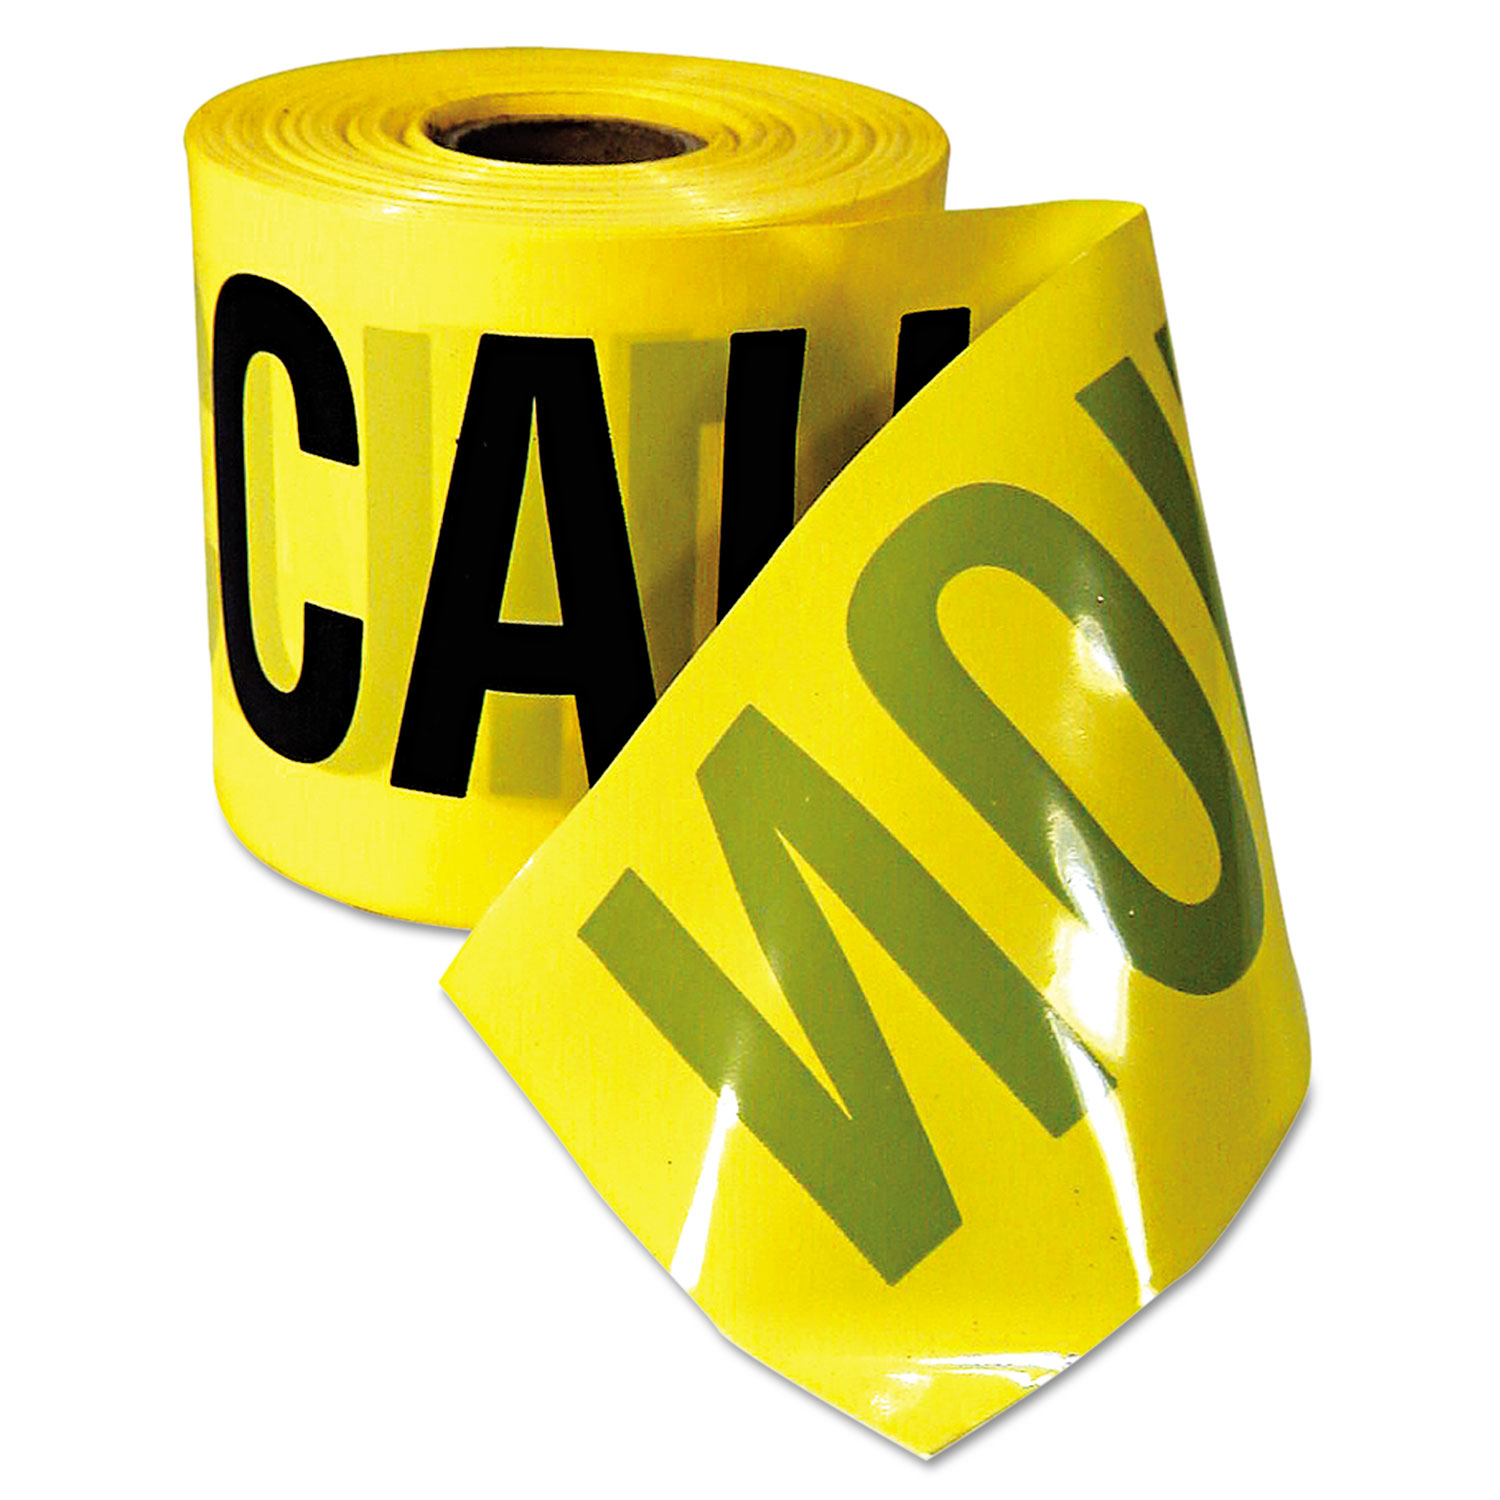 Caution Barricade Tape, 